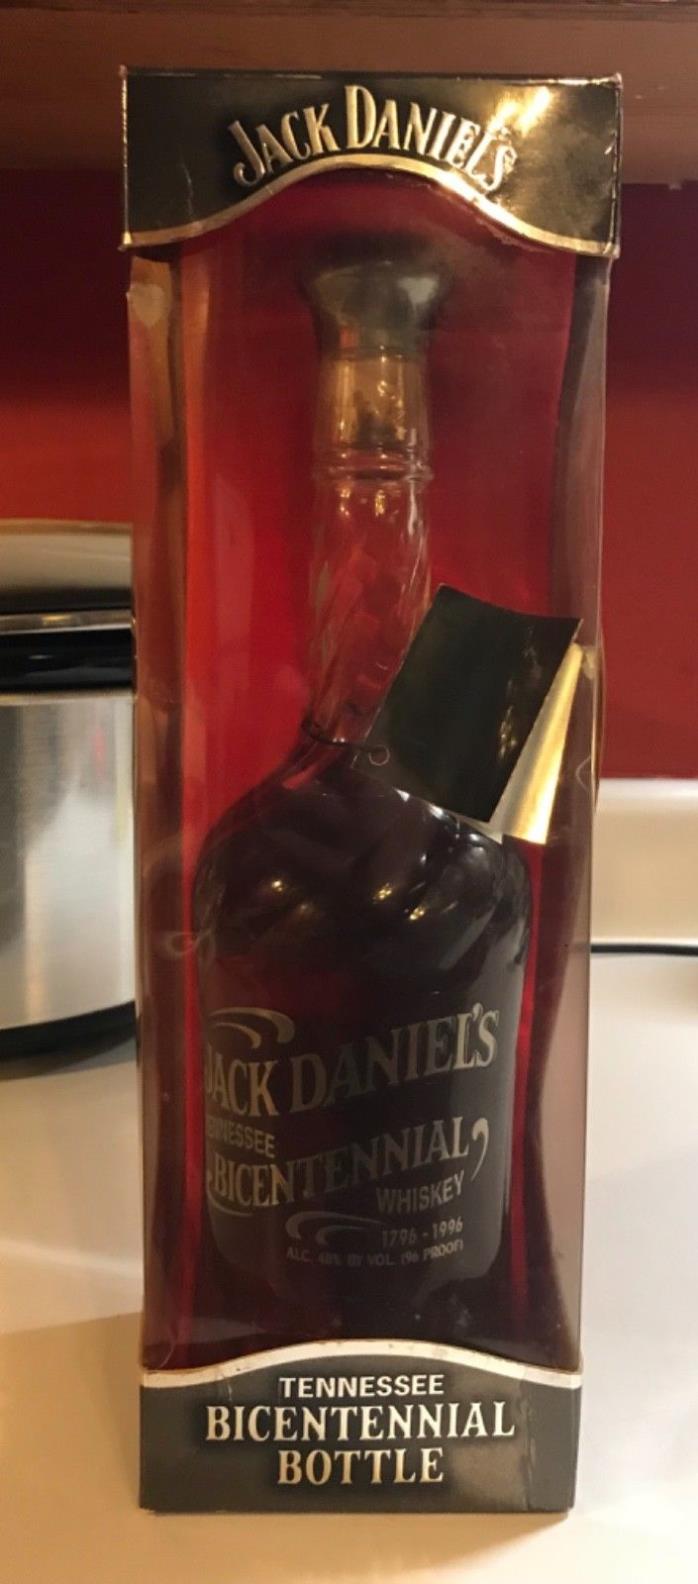 Jack Daniels Tennessee Whiskey Bicentennial Bottle Decanter - Never Opened